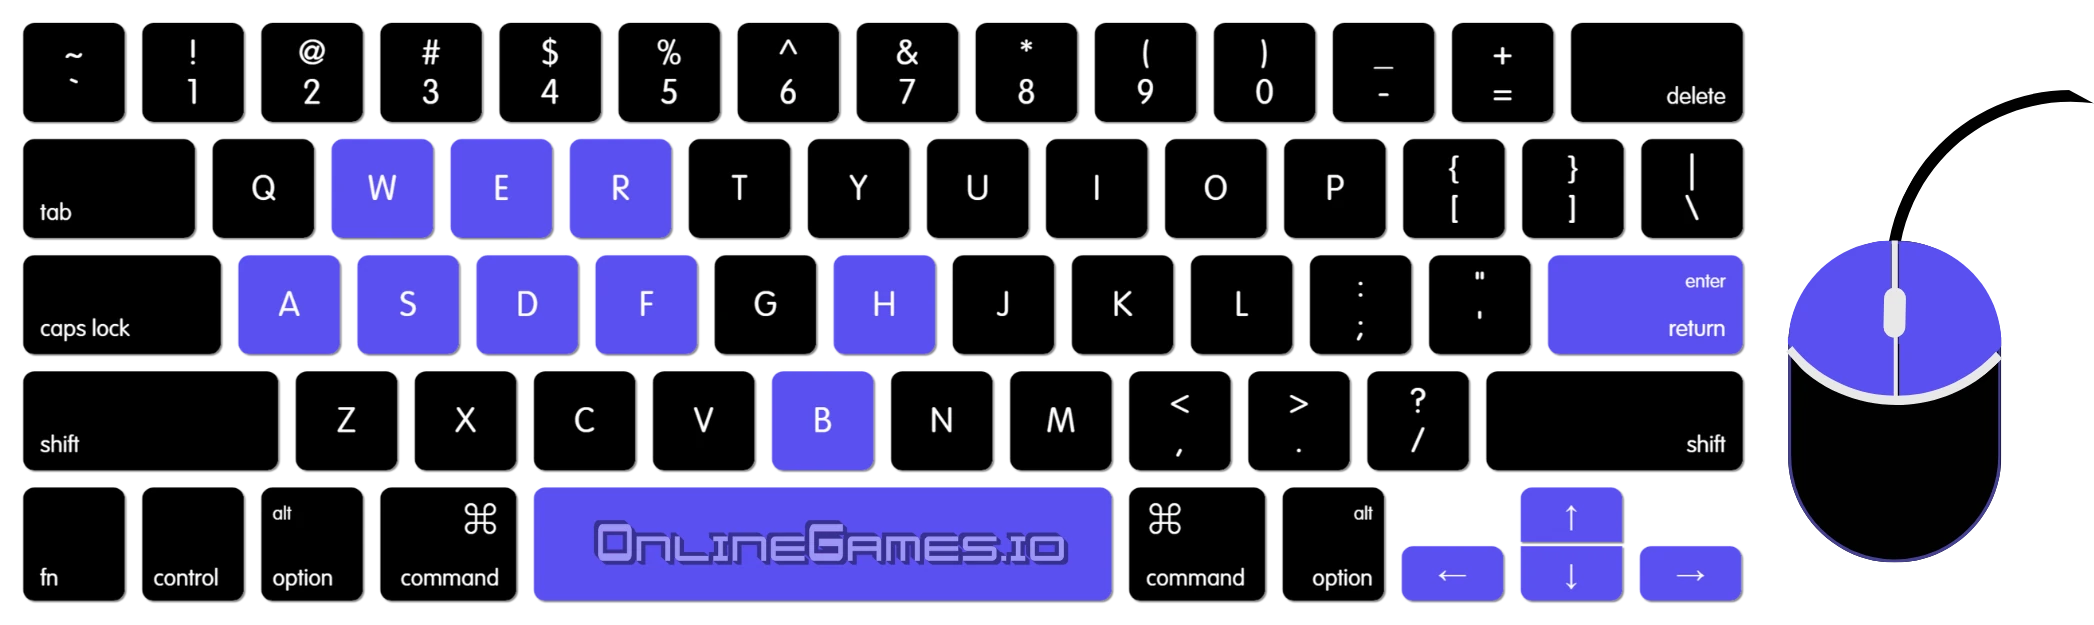 Venge Io Keyboard Controls